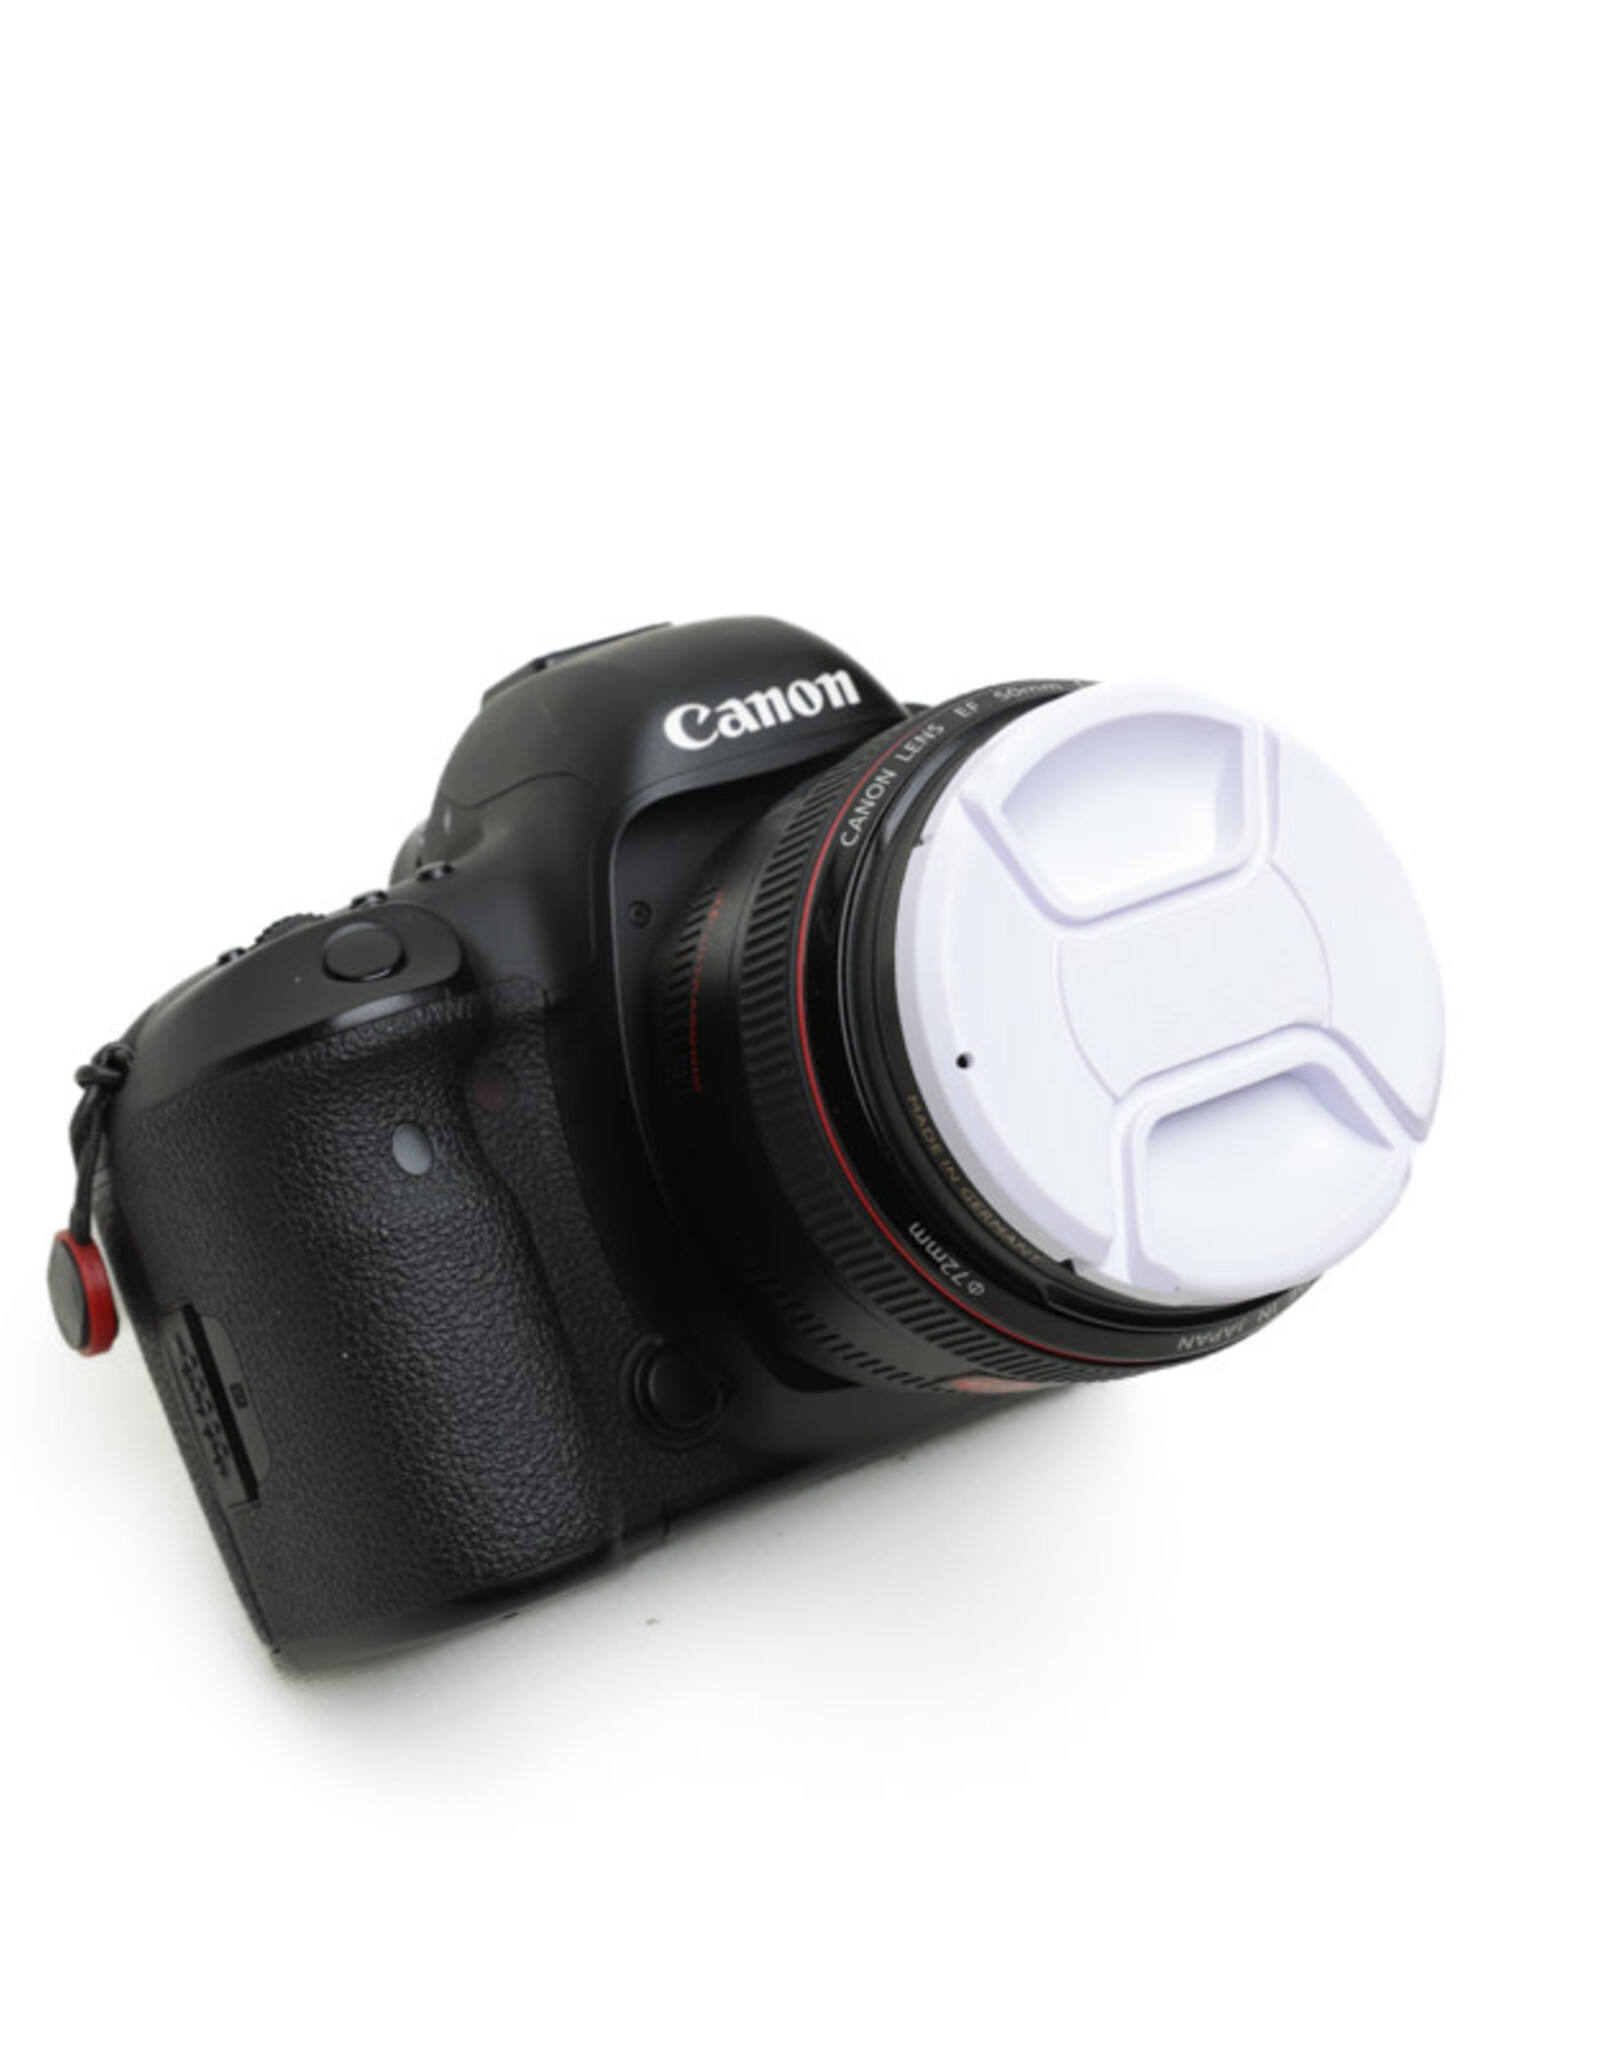 72mm White Center Pinch Lens Cap